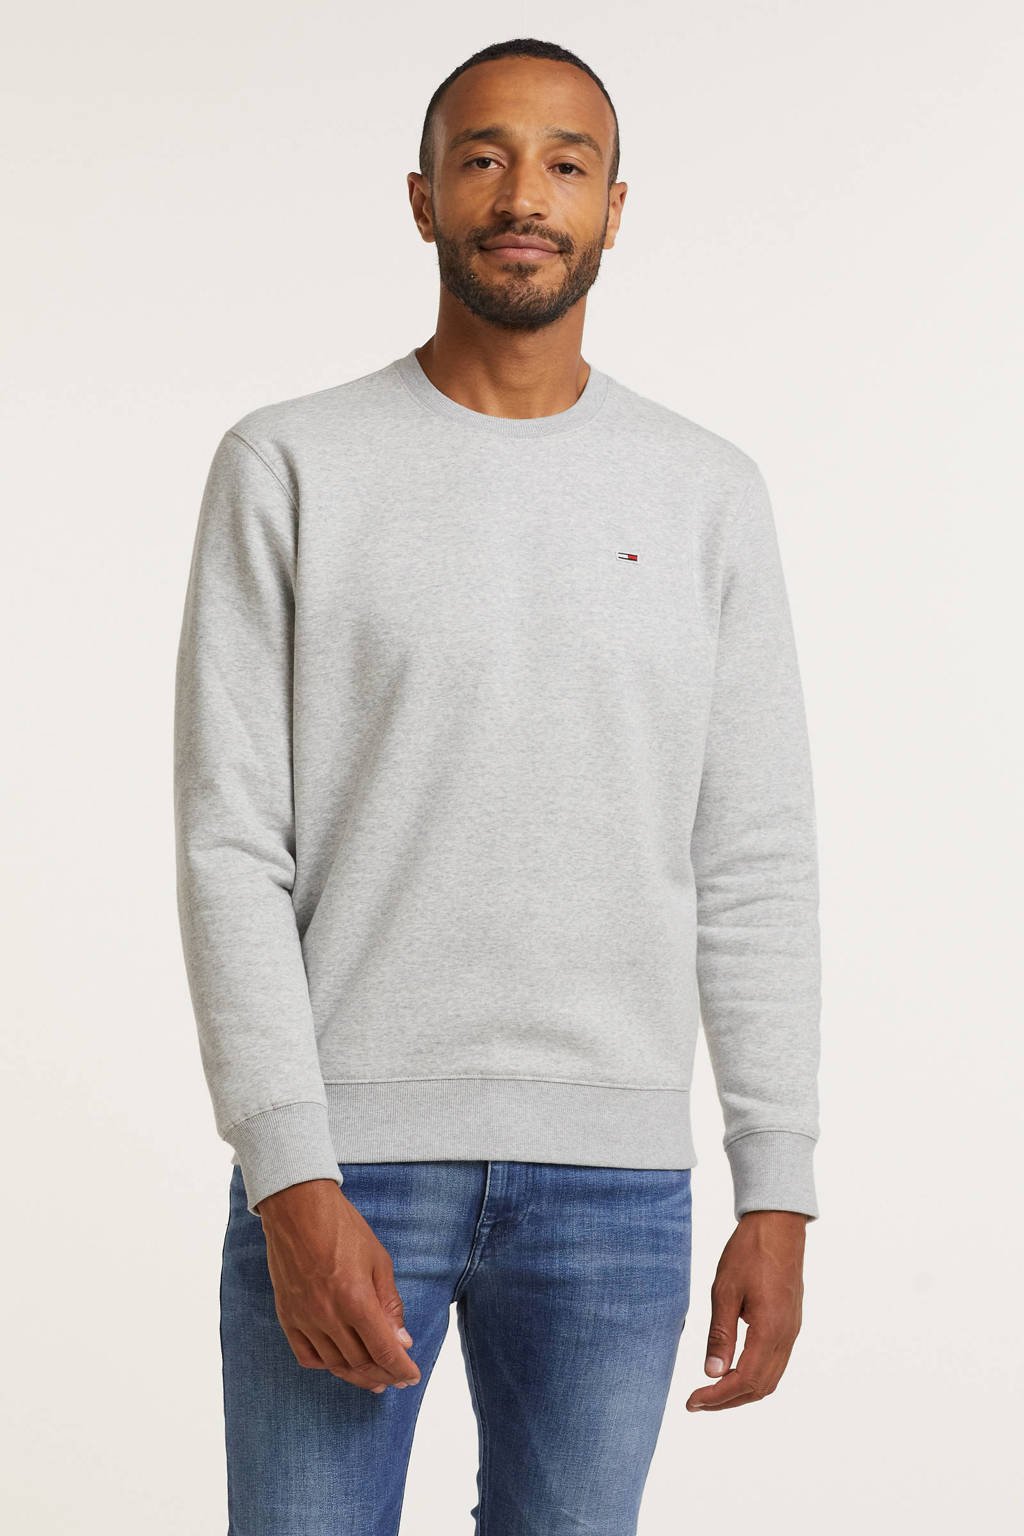 Tommy Jeans sweater light grey